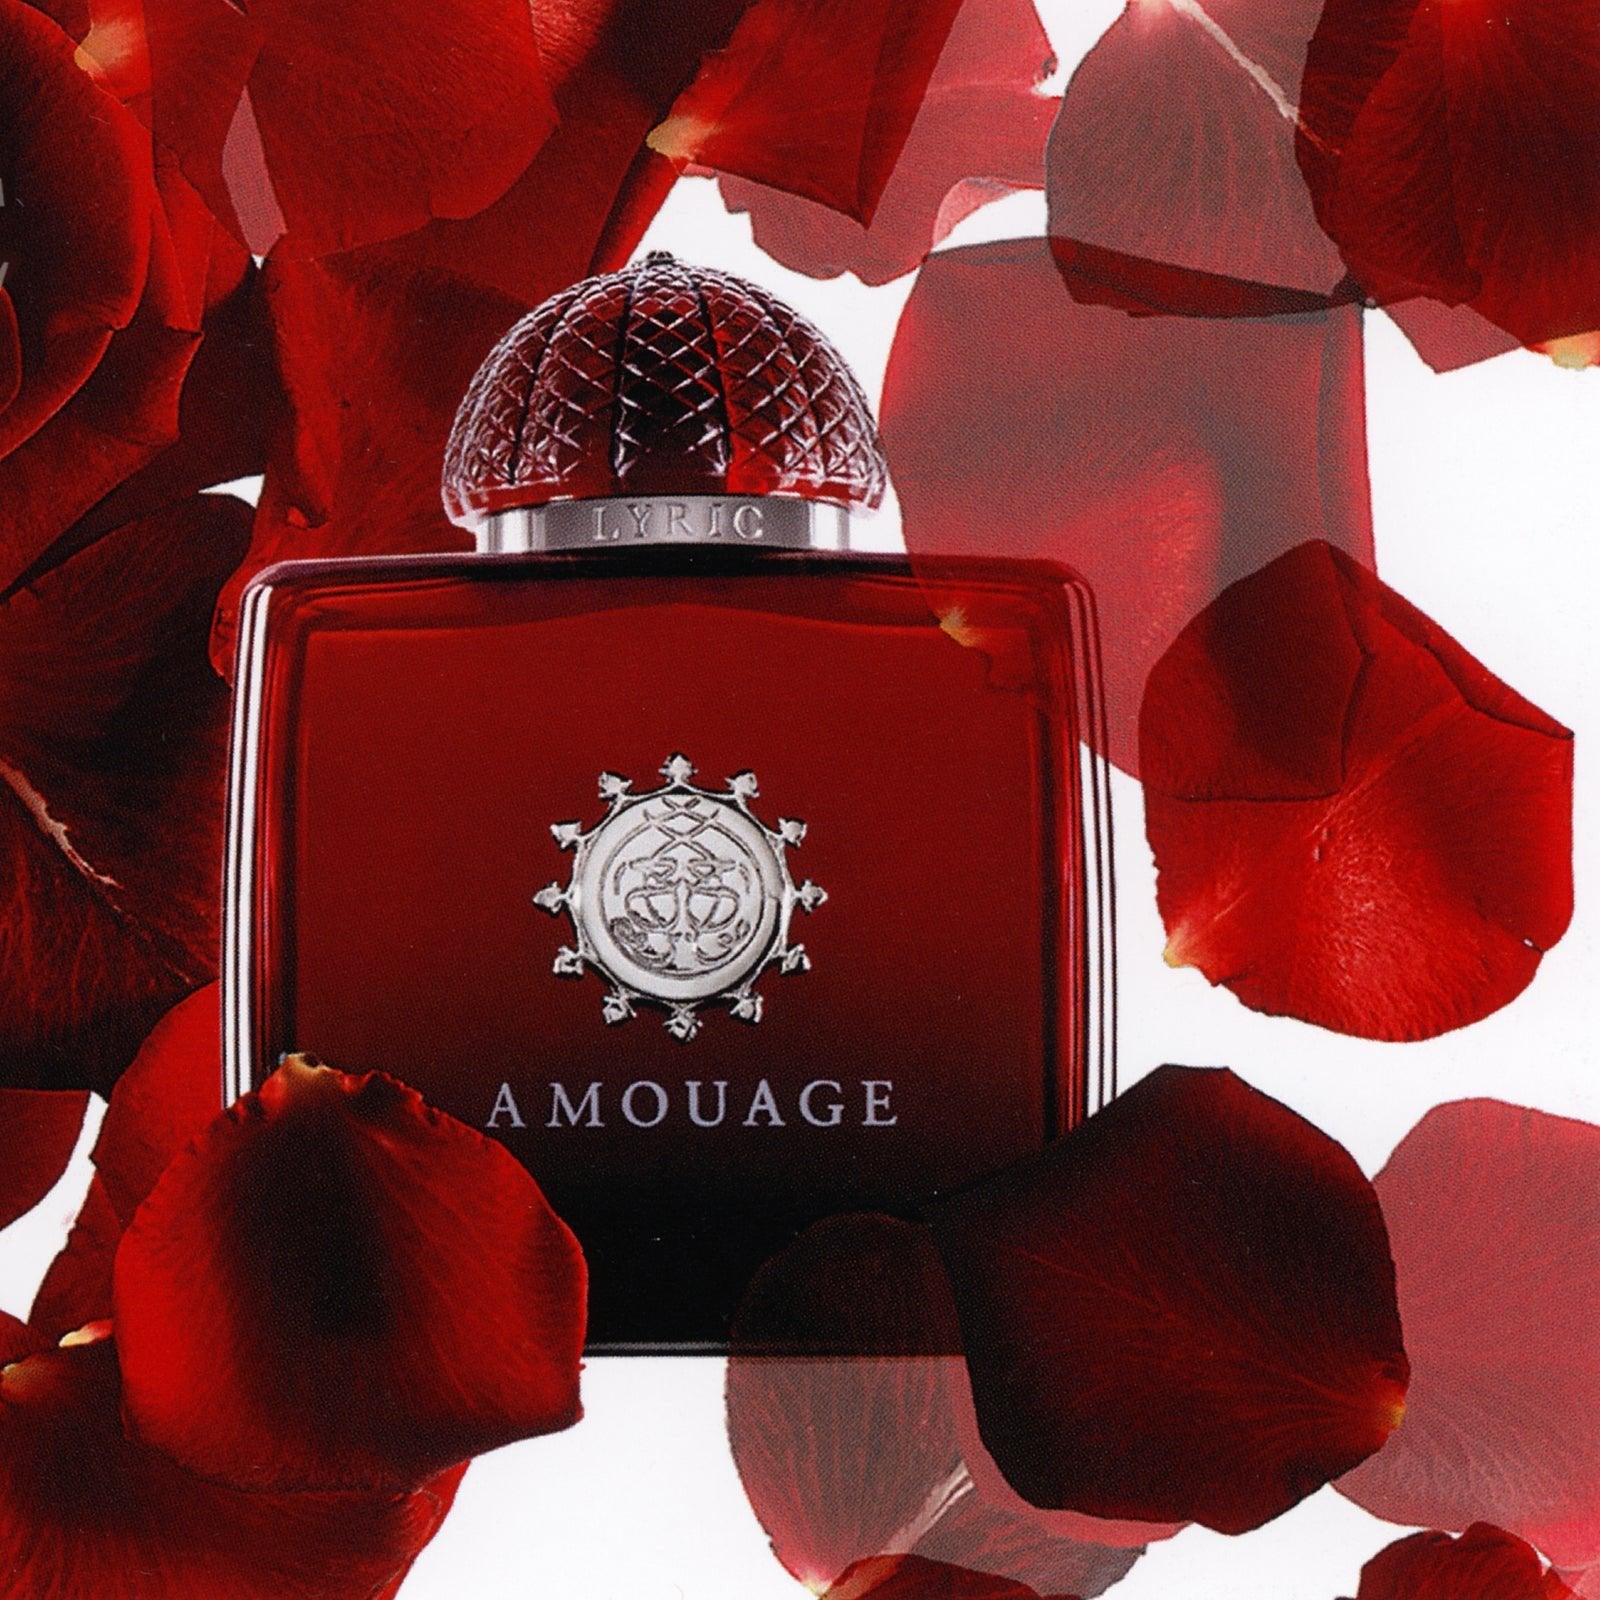 Amouage Lyric EDP For Women | My Perfume Shop Australia